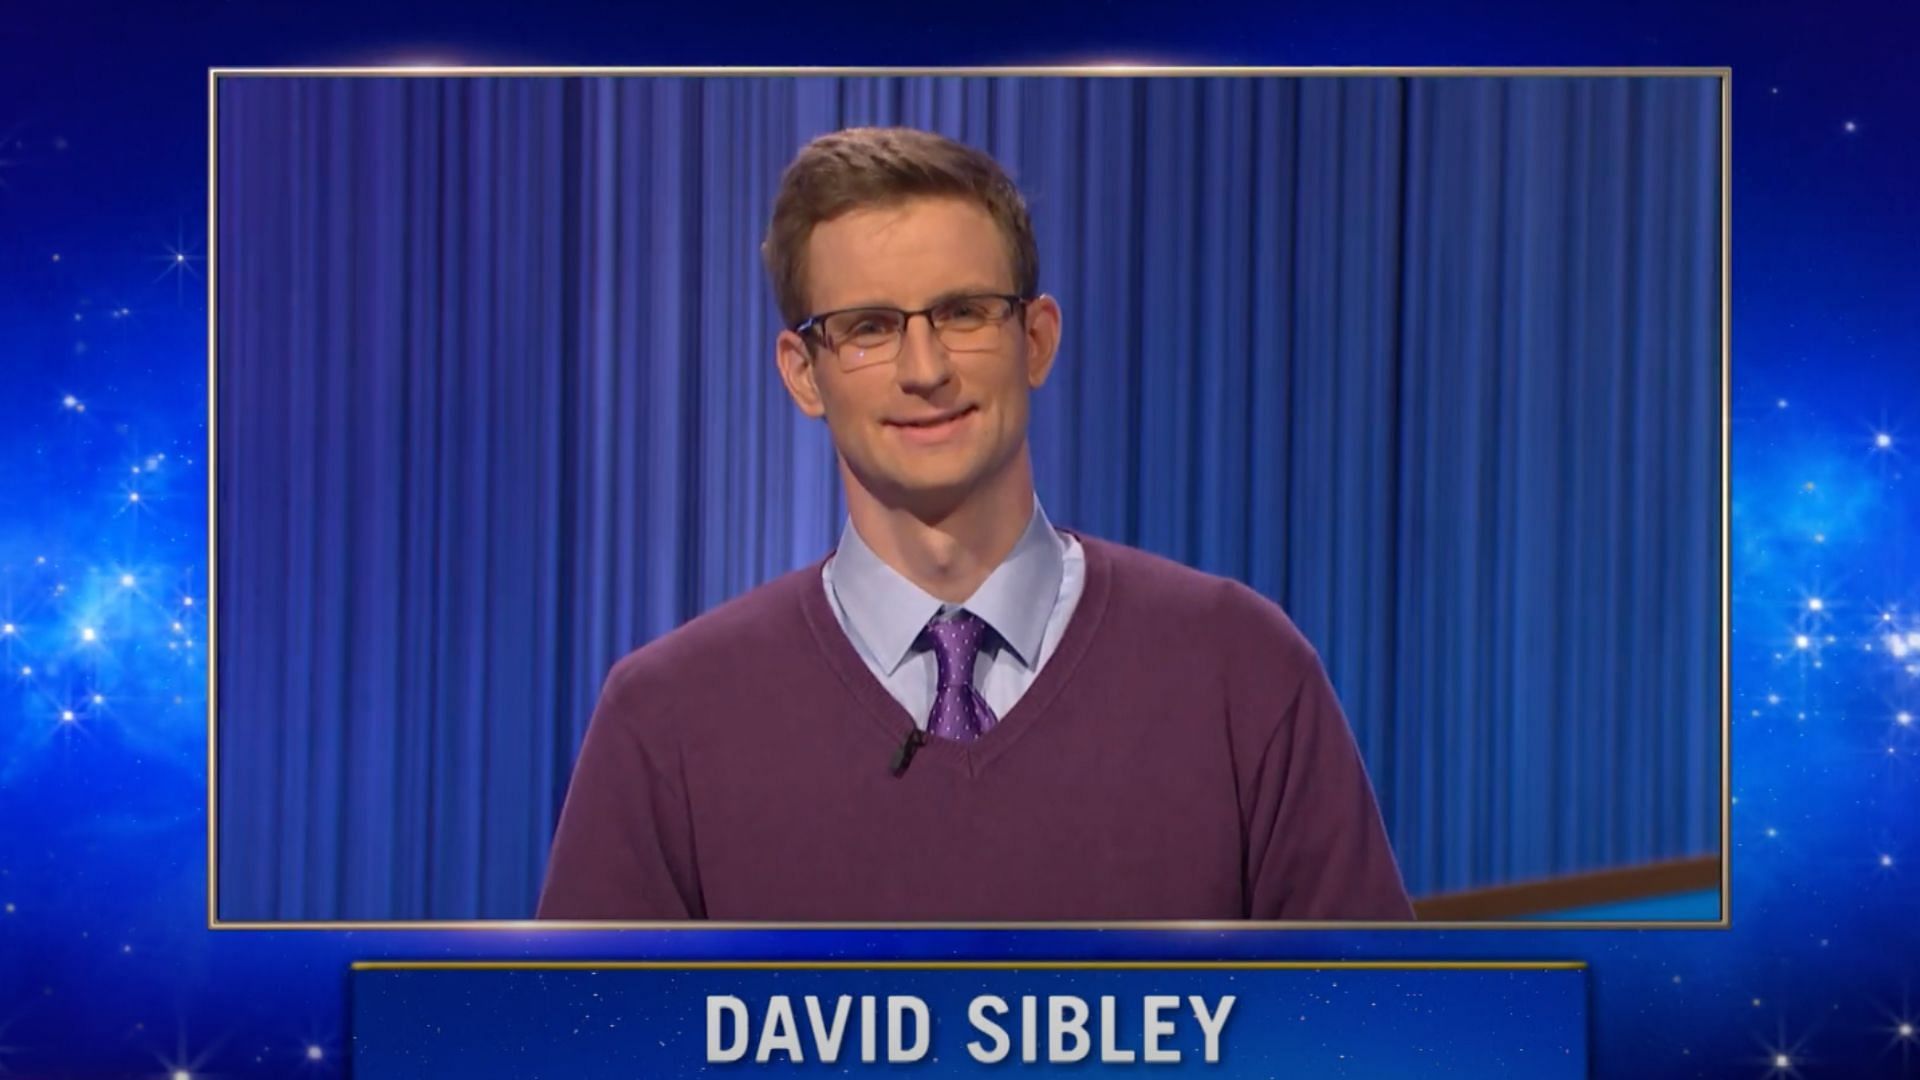 Who won Jeopardy! tonight? September 28, 2022, Wednesday